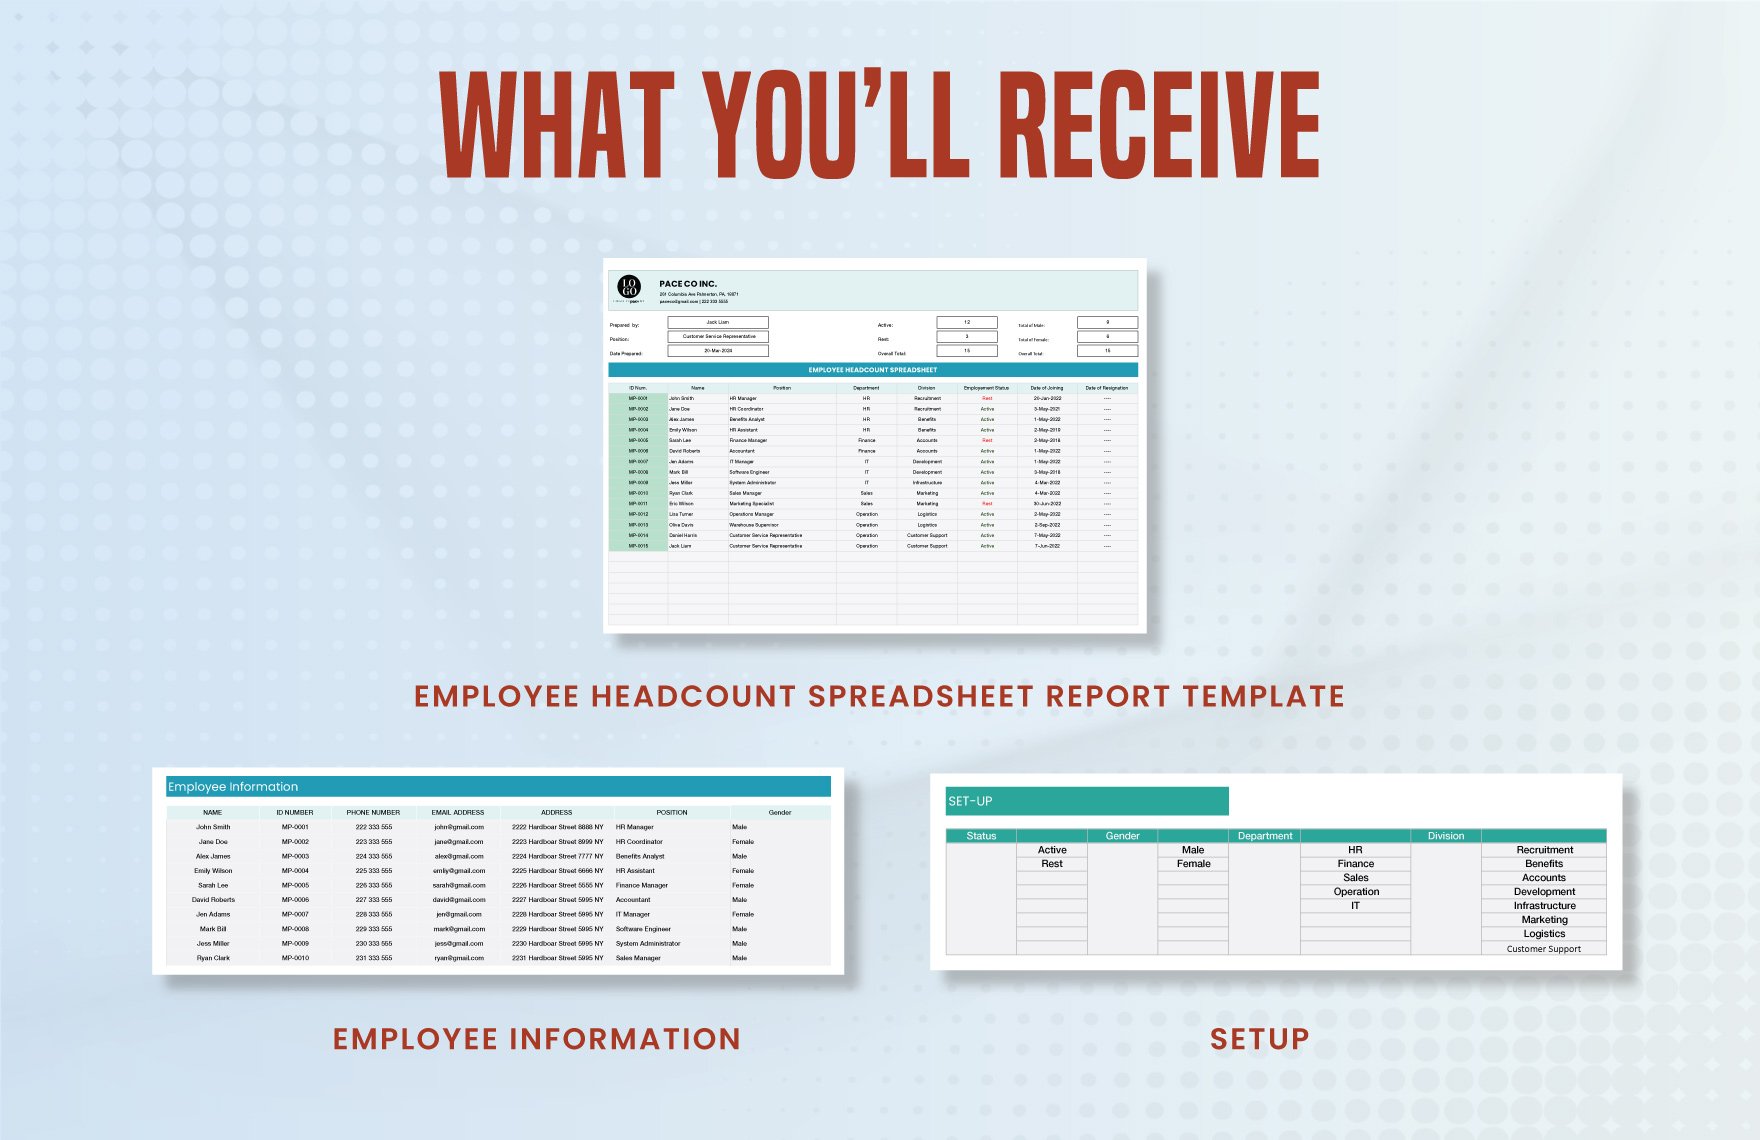 Employee Headcount Spreadsheet Report Template